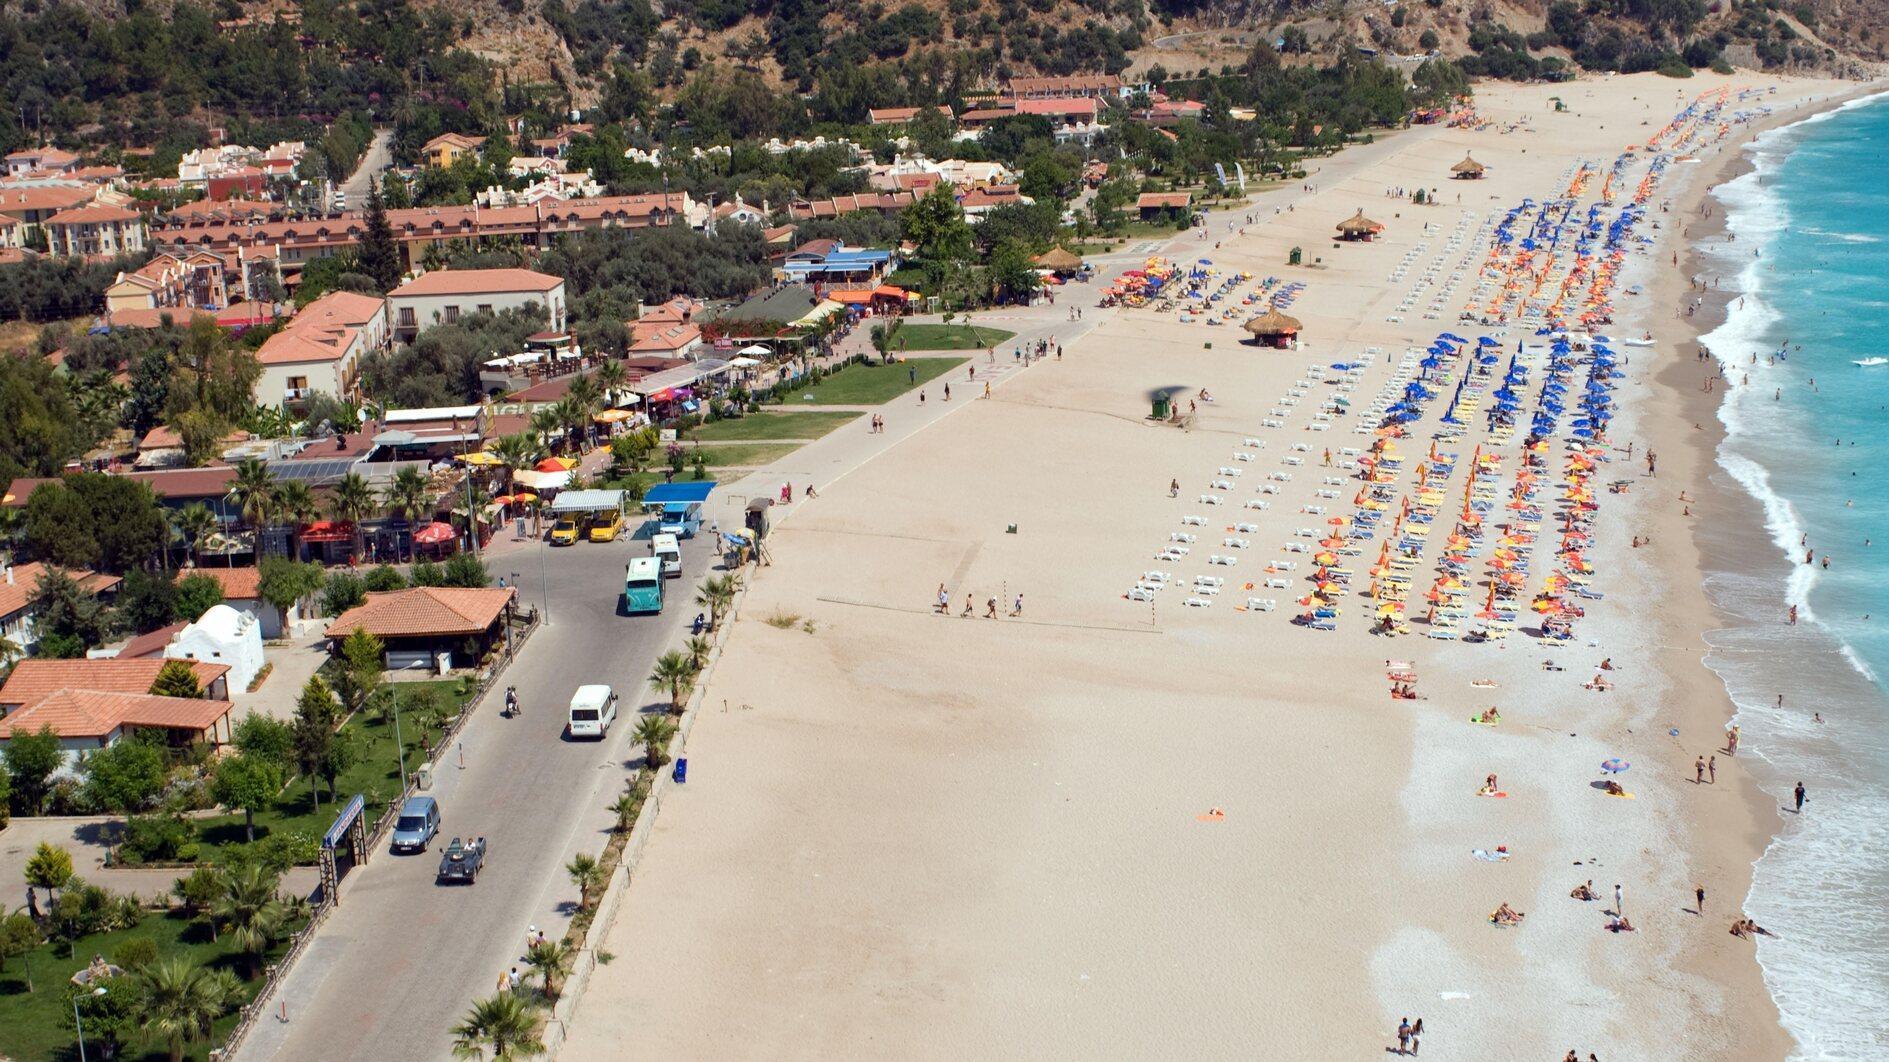  Bodrum beaches prepared for upcoming season